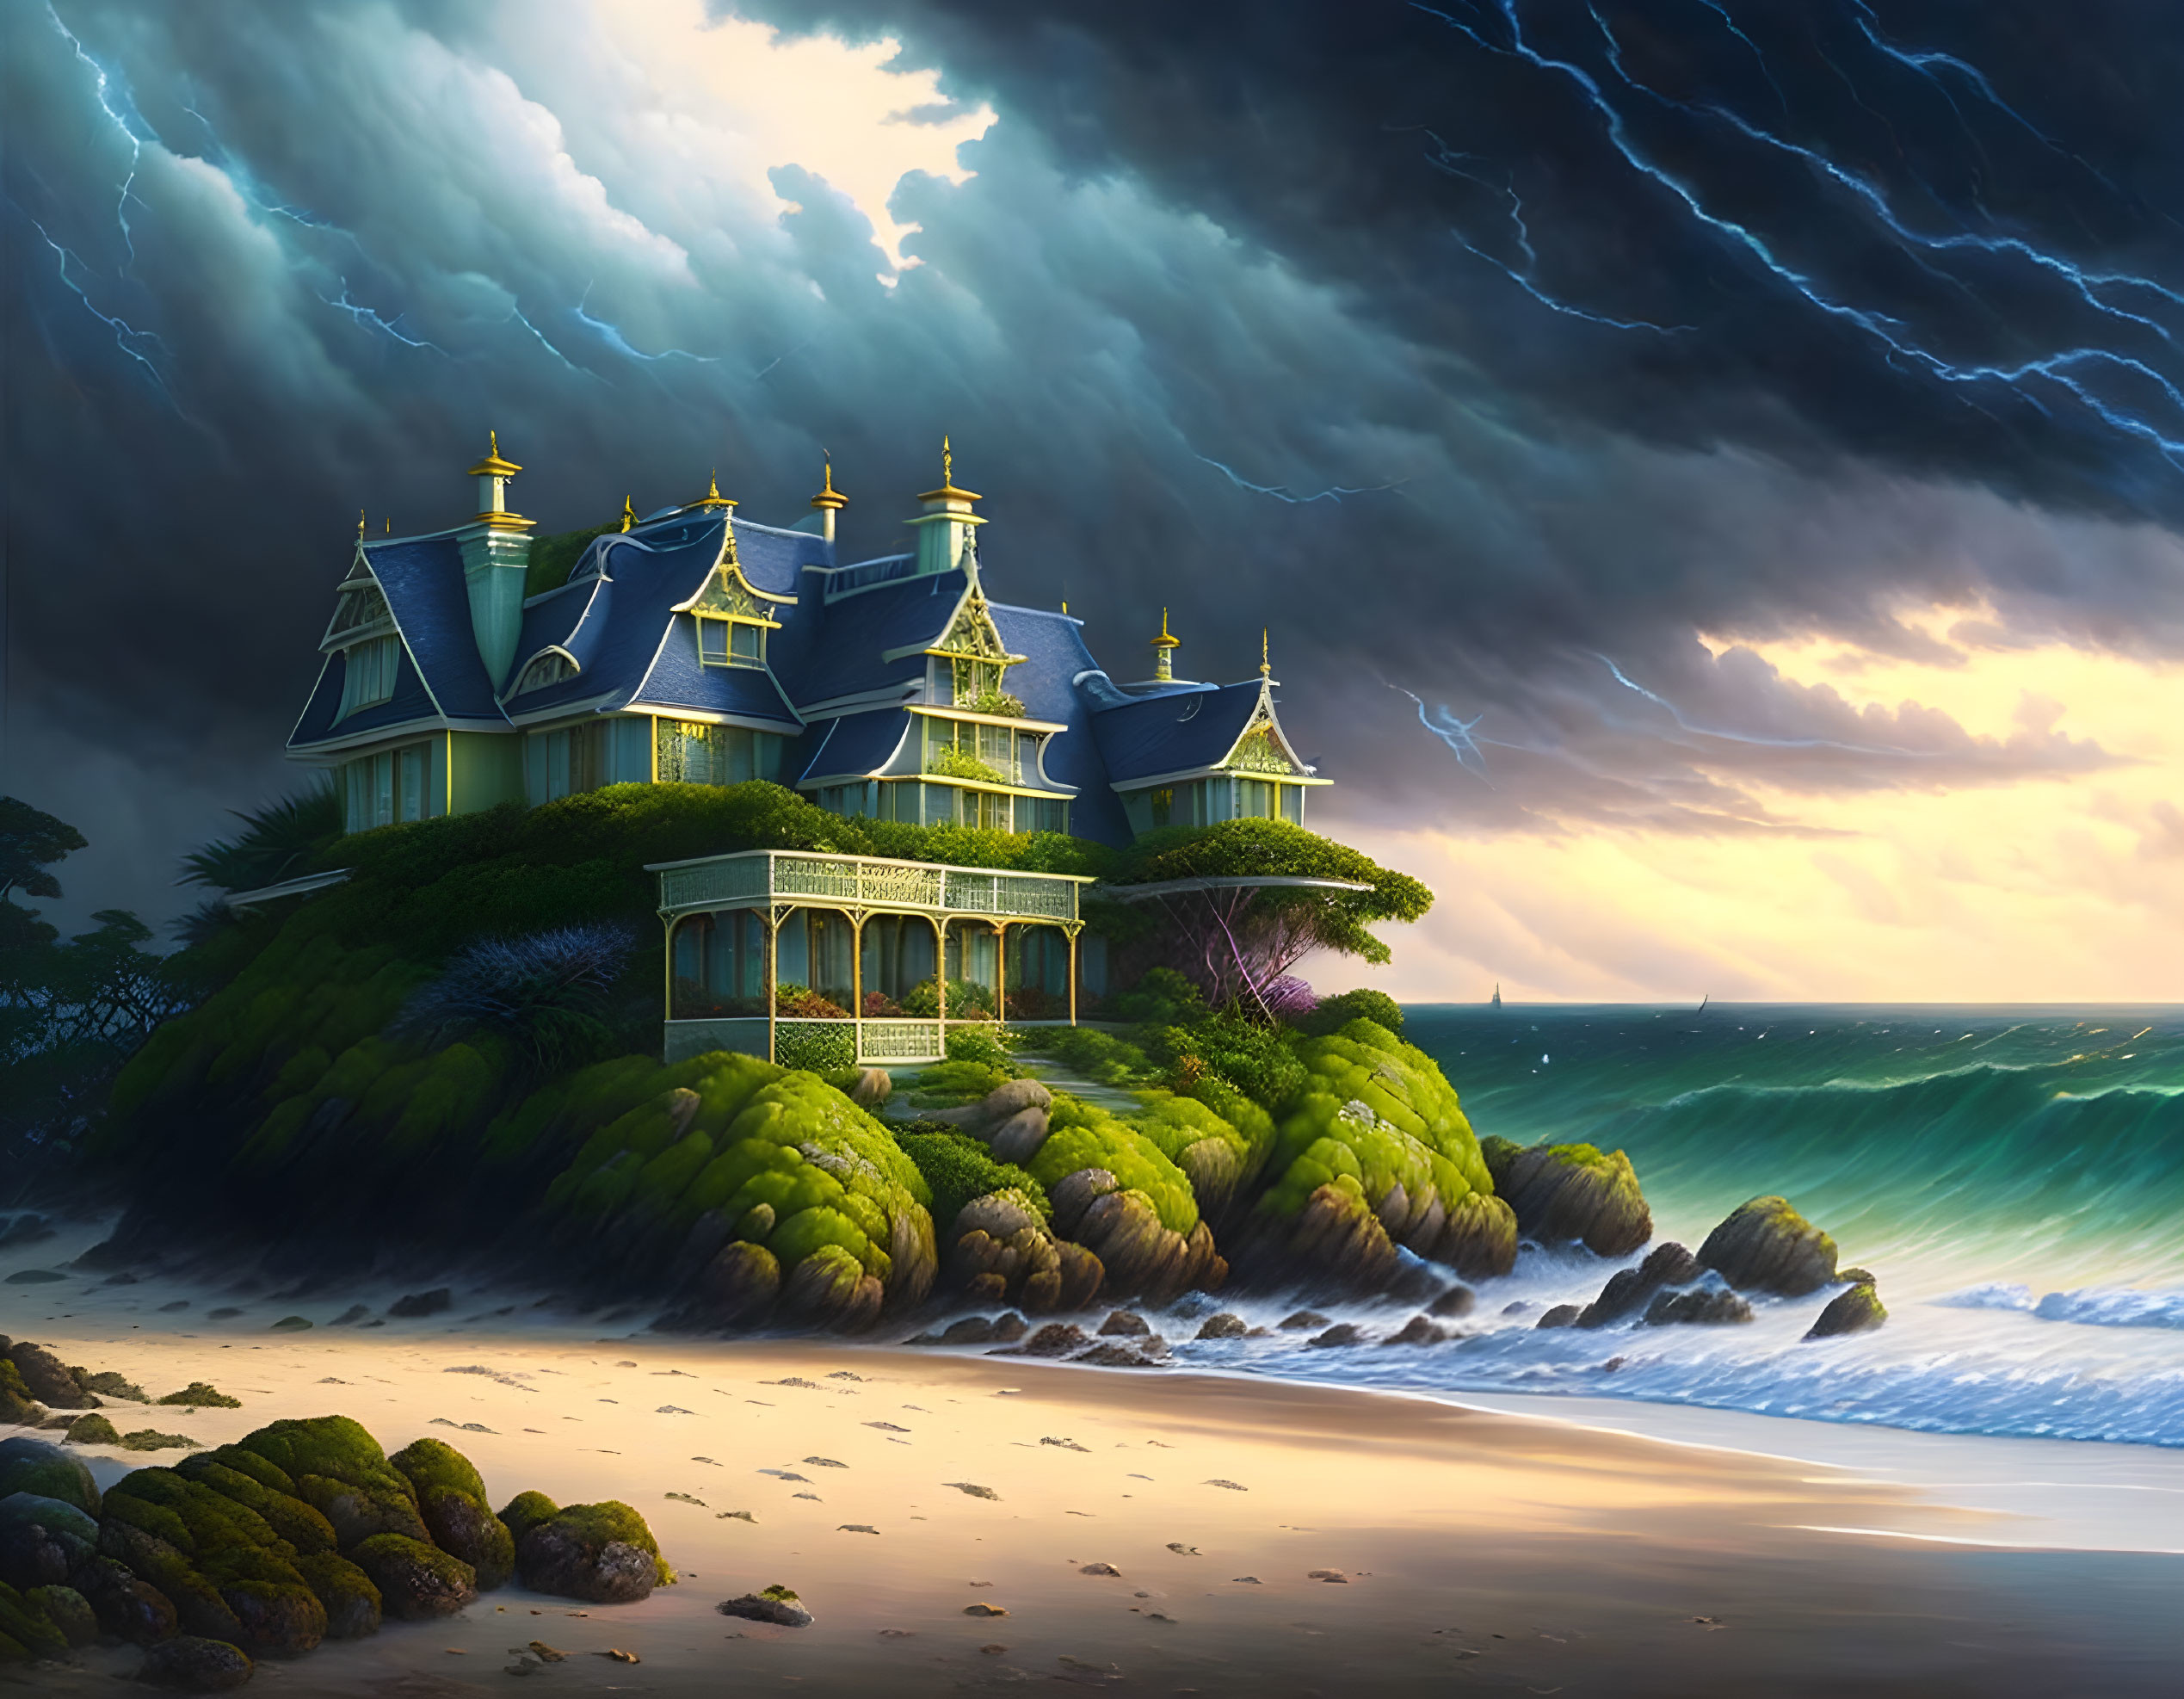 A beautiful, seaside estate house